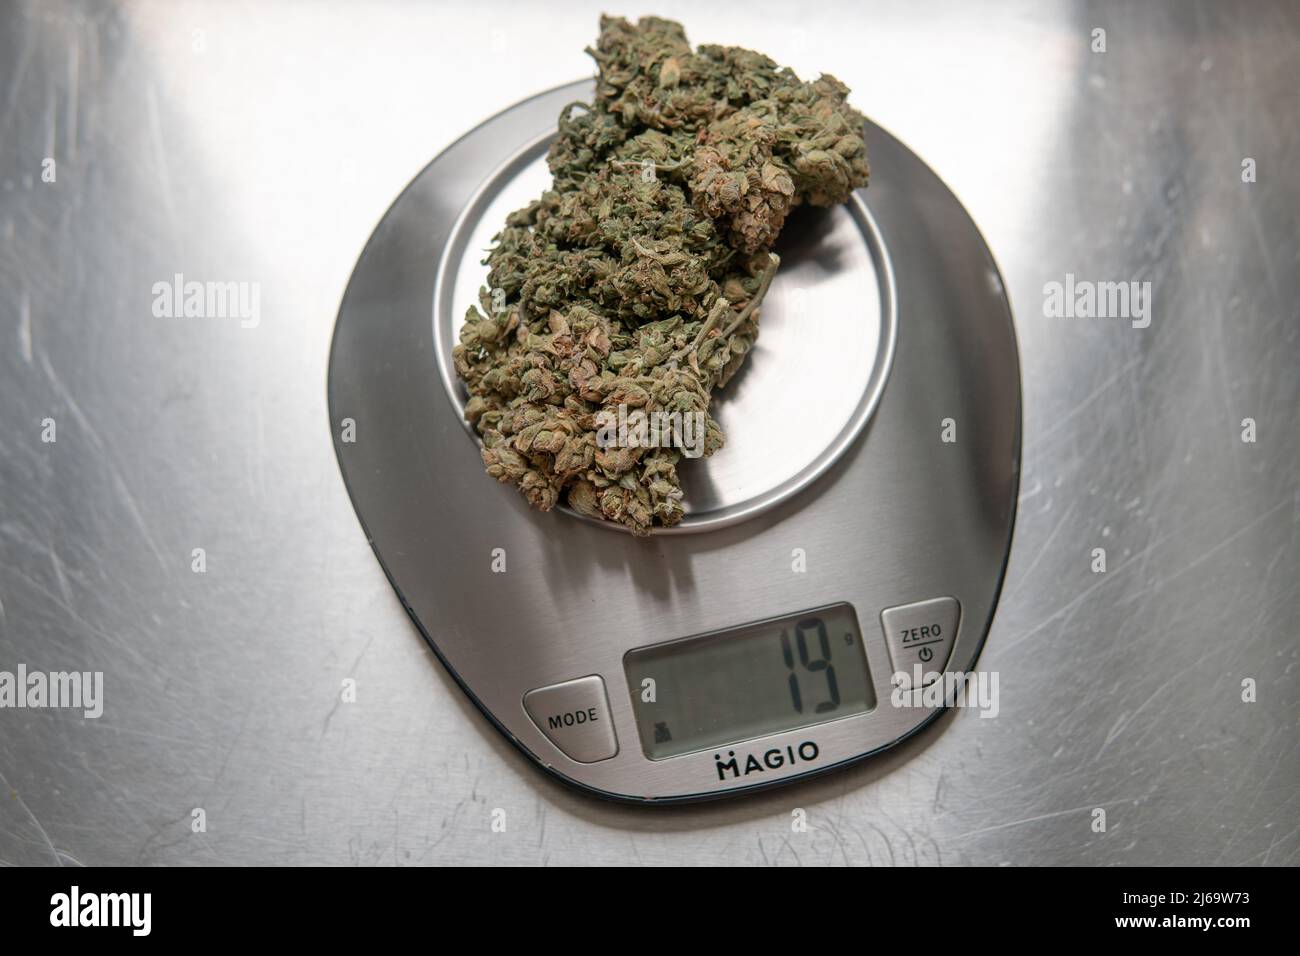 https://c8.alamy.com/comp/2J69W73/pressed-marijuana-buds-on-metal-scales-legalization-of-the-recr-2J69W73.jpg